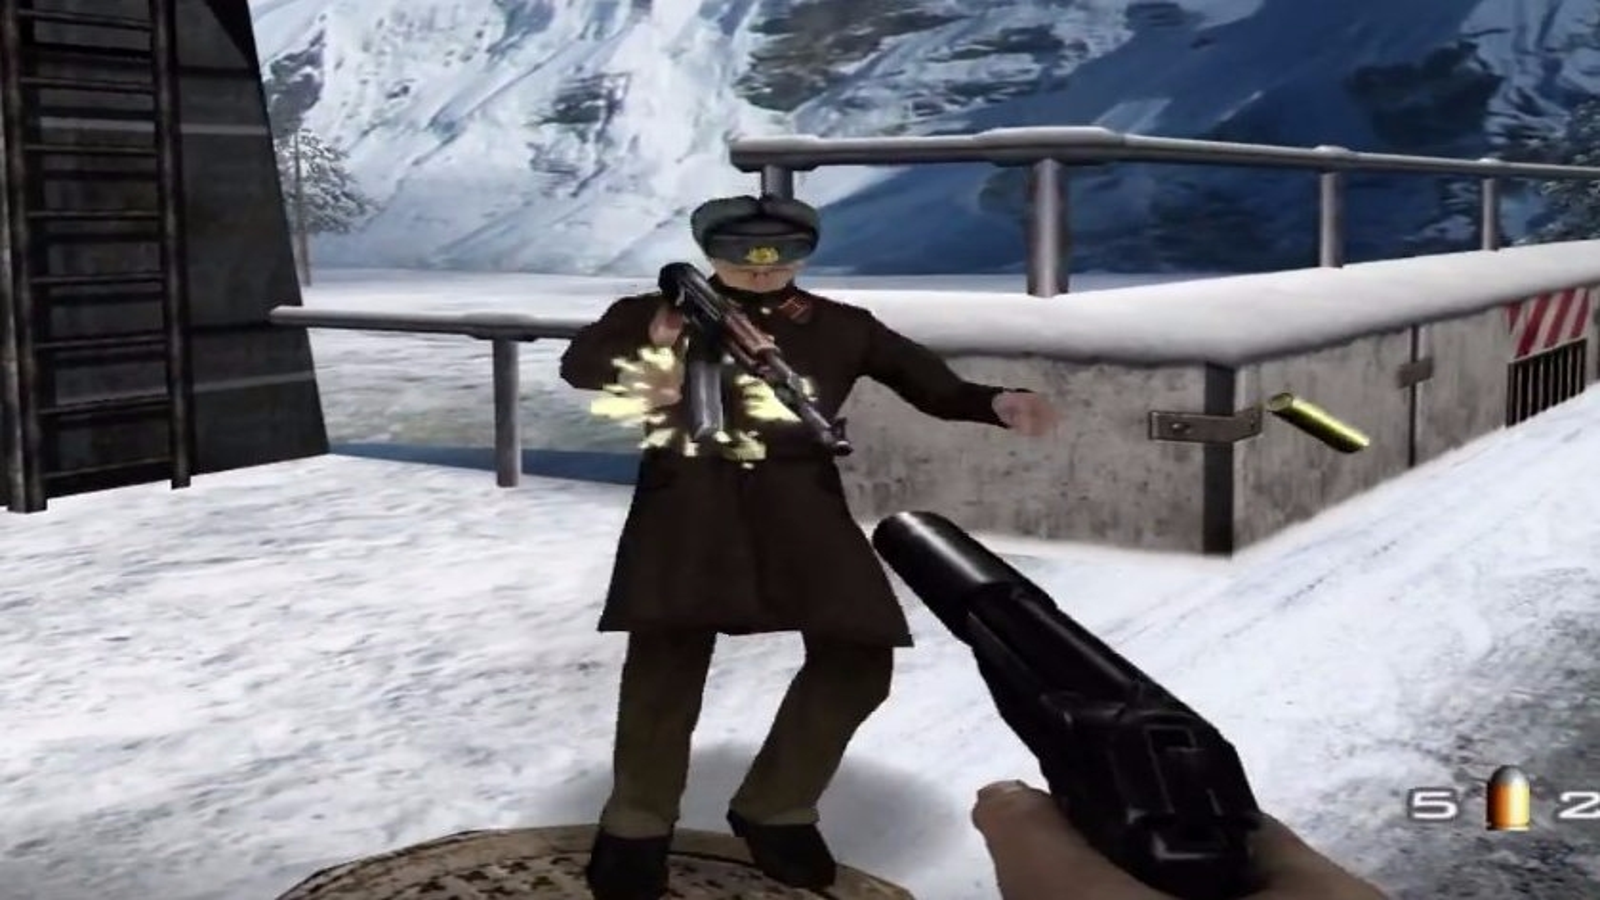 GoldenEye 007 - Unreleased Xbox 360 Remaster vs. 2010 Wii Remake